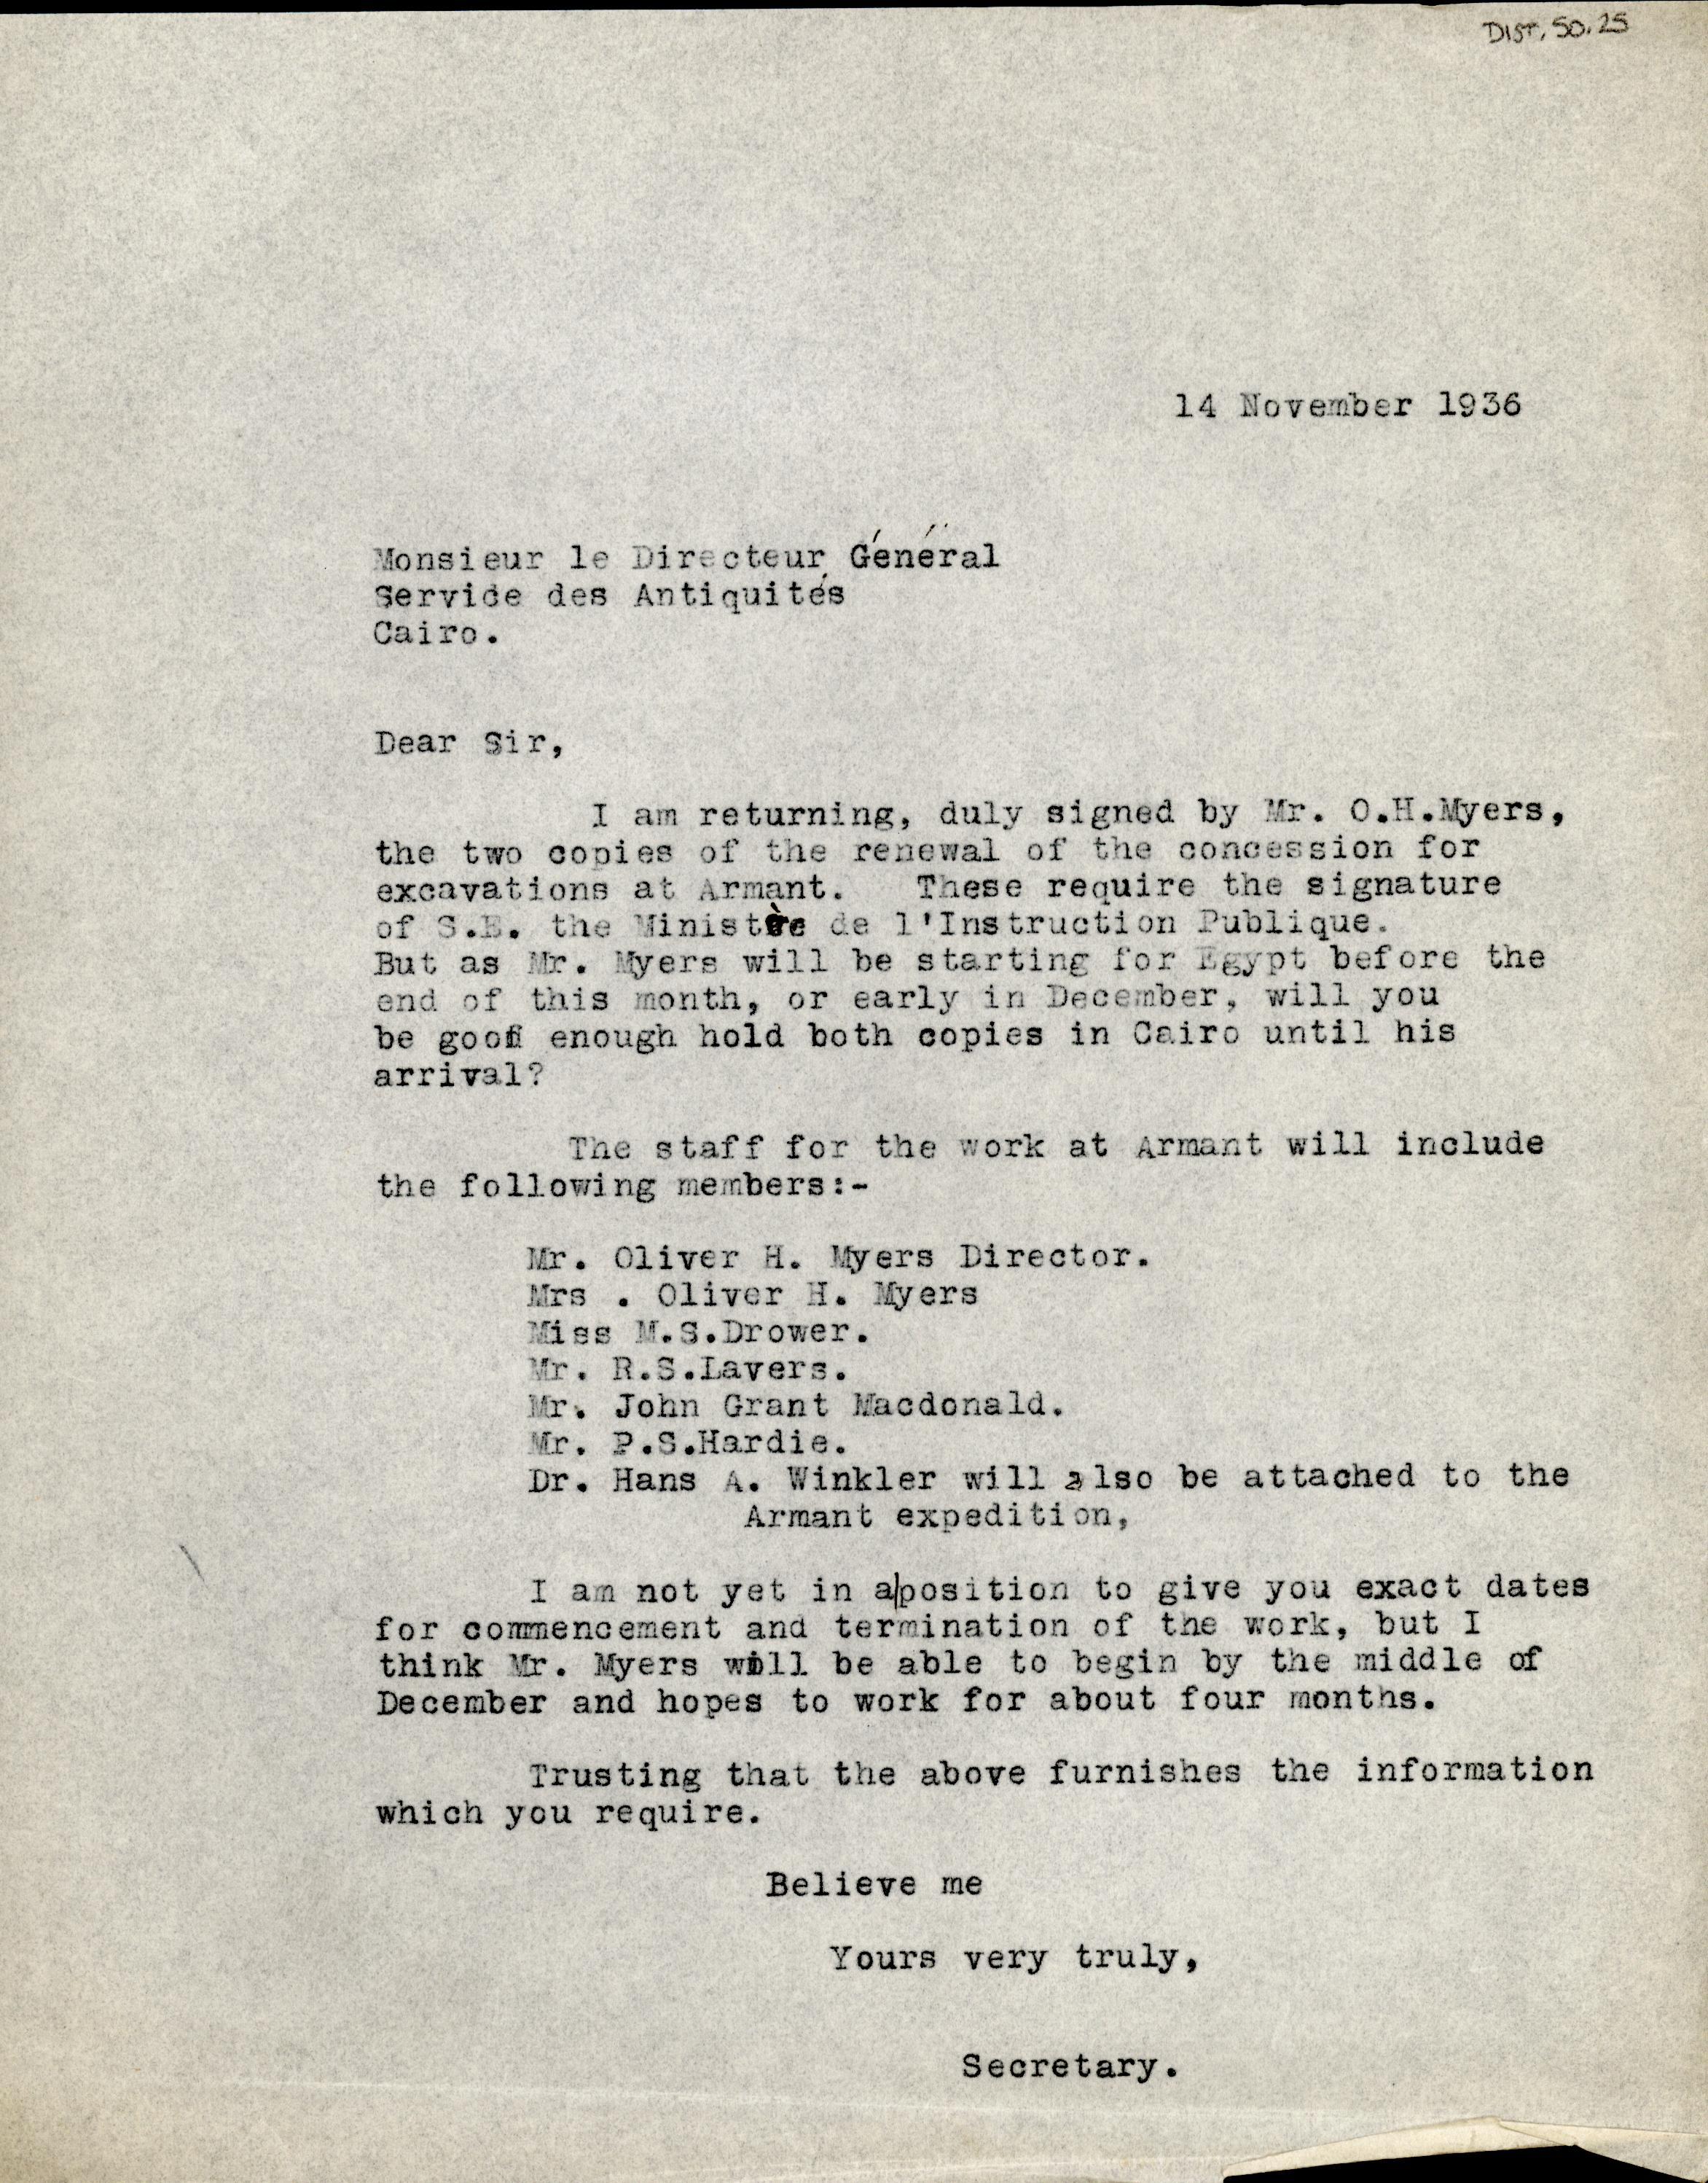 1926-39 correspondence with Antiquities Service DIST.50.25